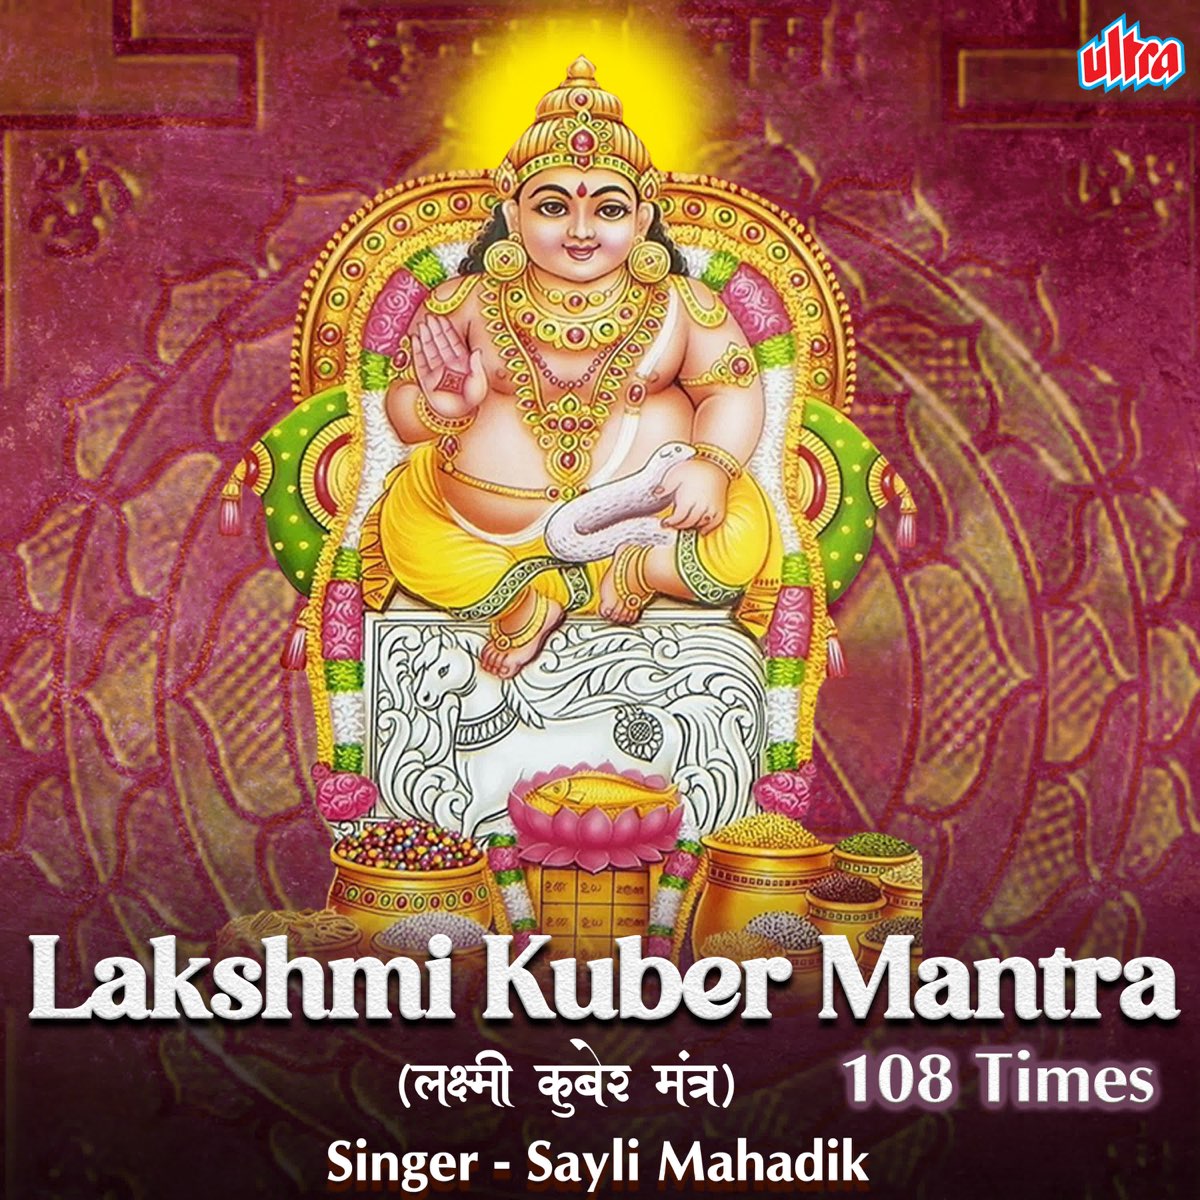 Lakshmi Kuber Mantra 108 Times by Sayli Mahadik on Apple Music